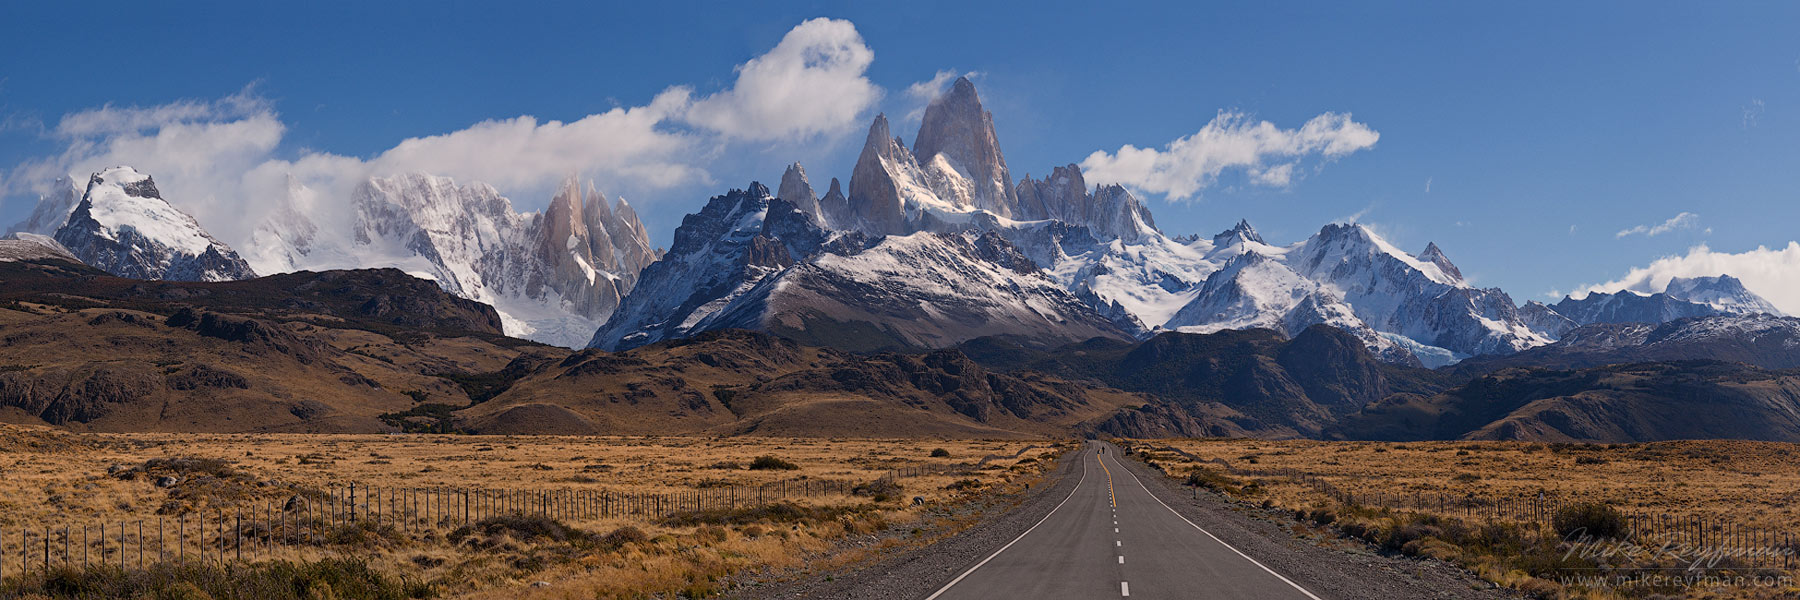 Ruta Cordillera. Fitzroy and Cerro Torre Massifs from Road 40. Santa Cruz, Patagonia, Argentina.